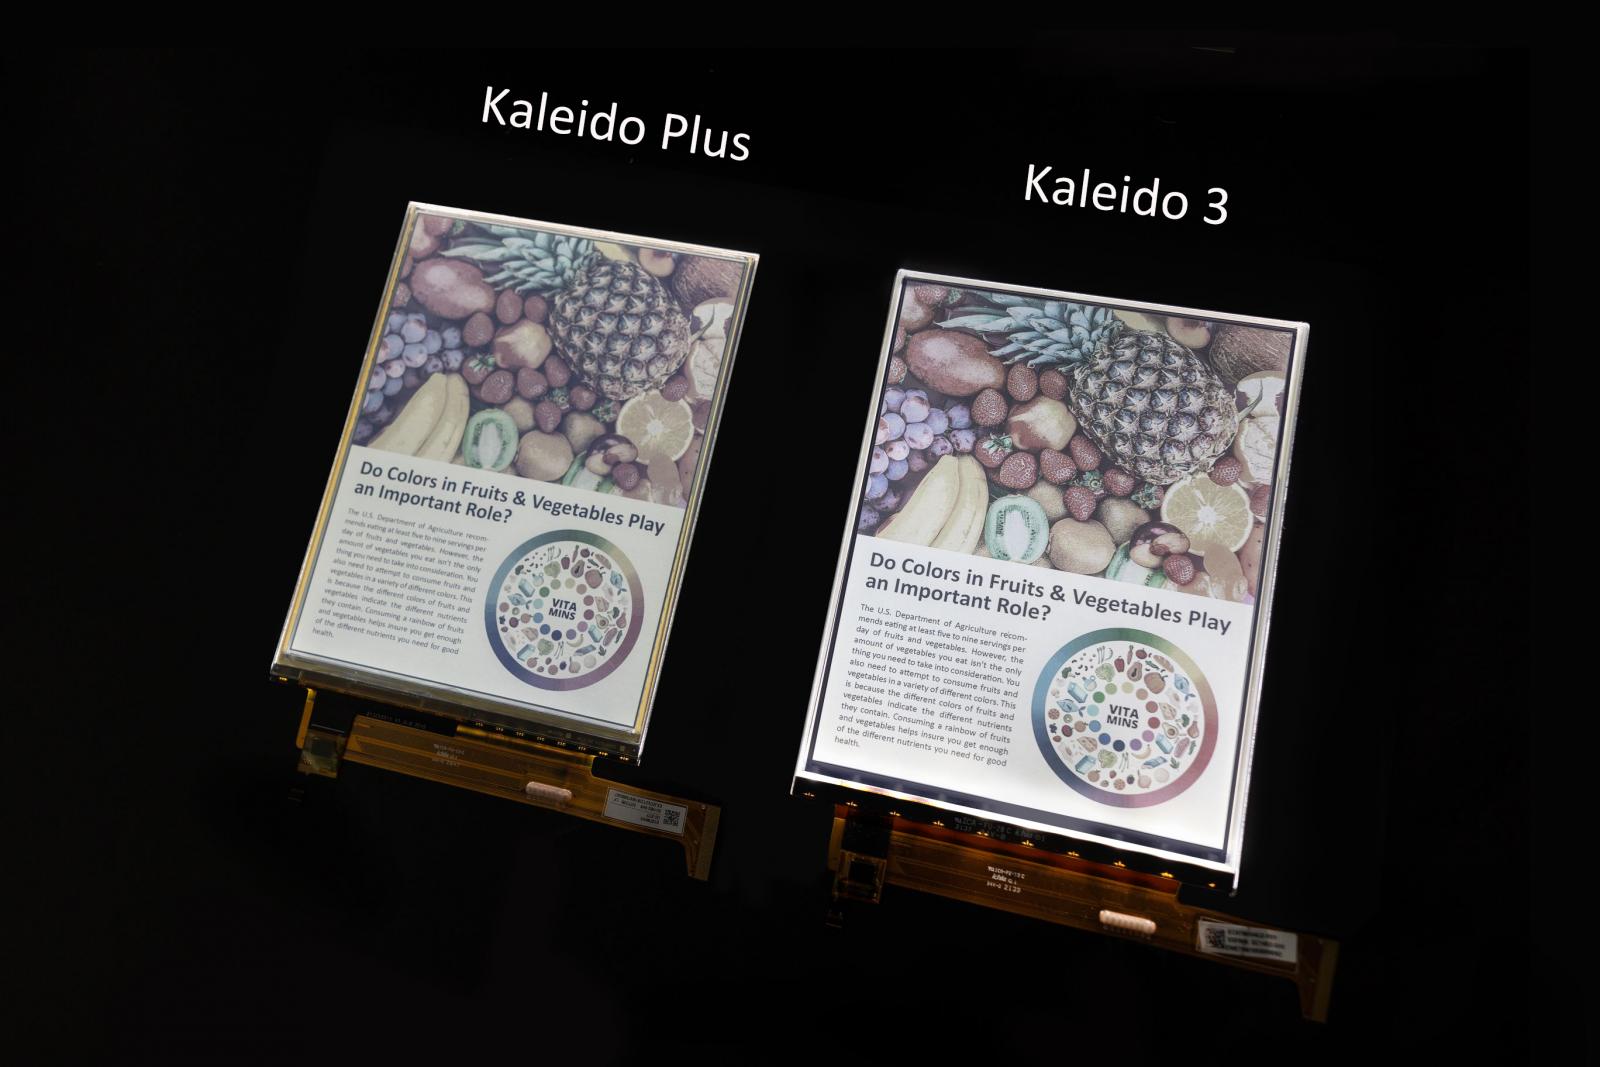 Представлены бумагоподобные цветные экраны E Ink Kaleido 3 для электронных книг фото